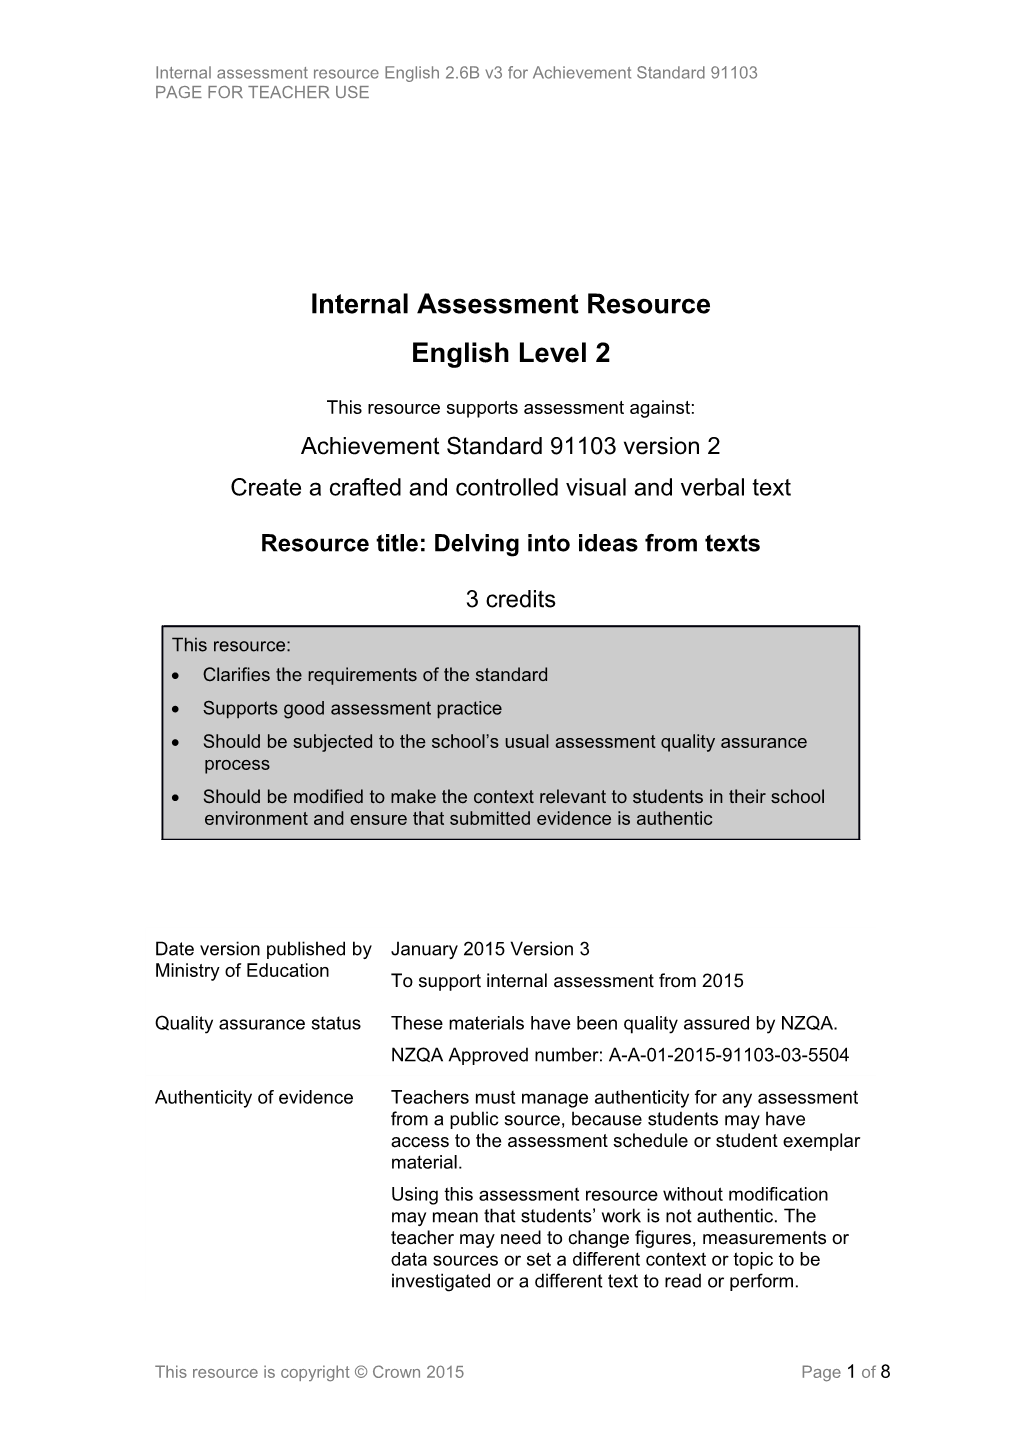 Level 2 English Internal Assessment Resource